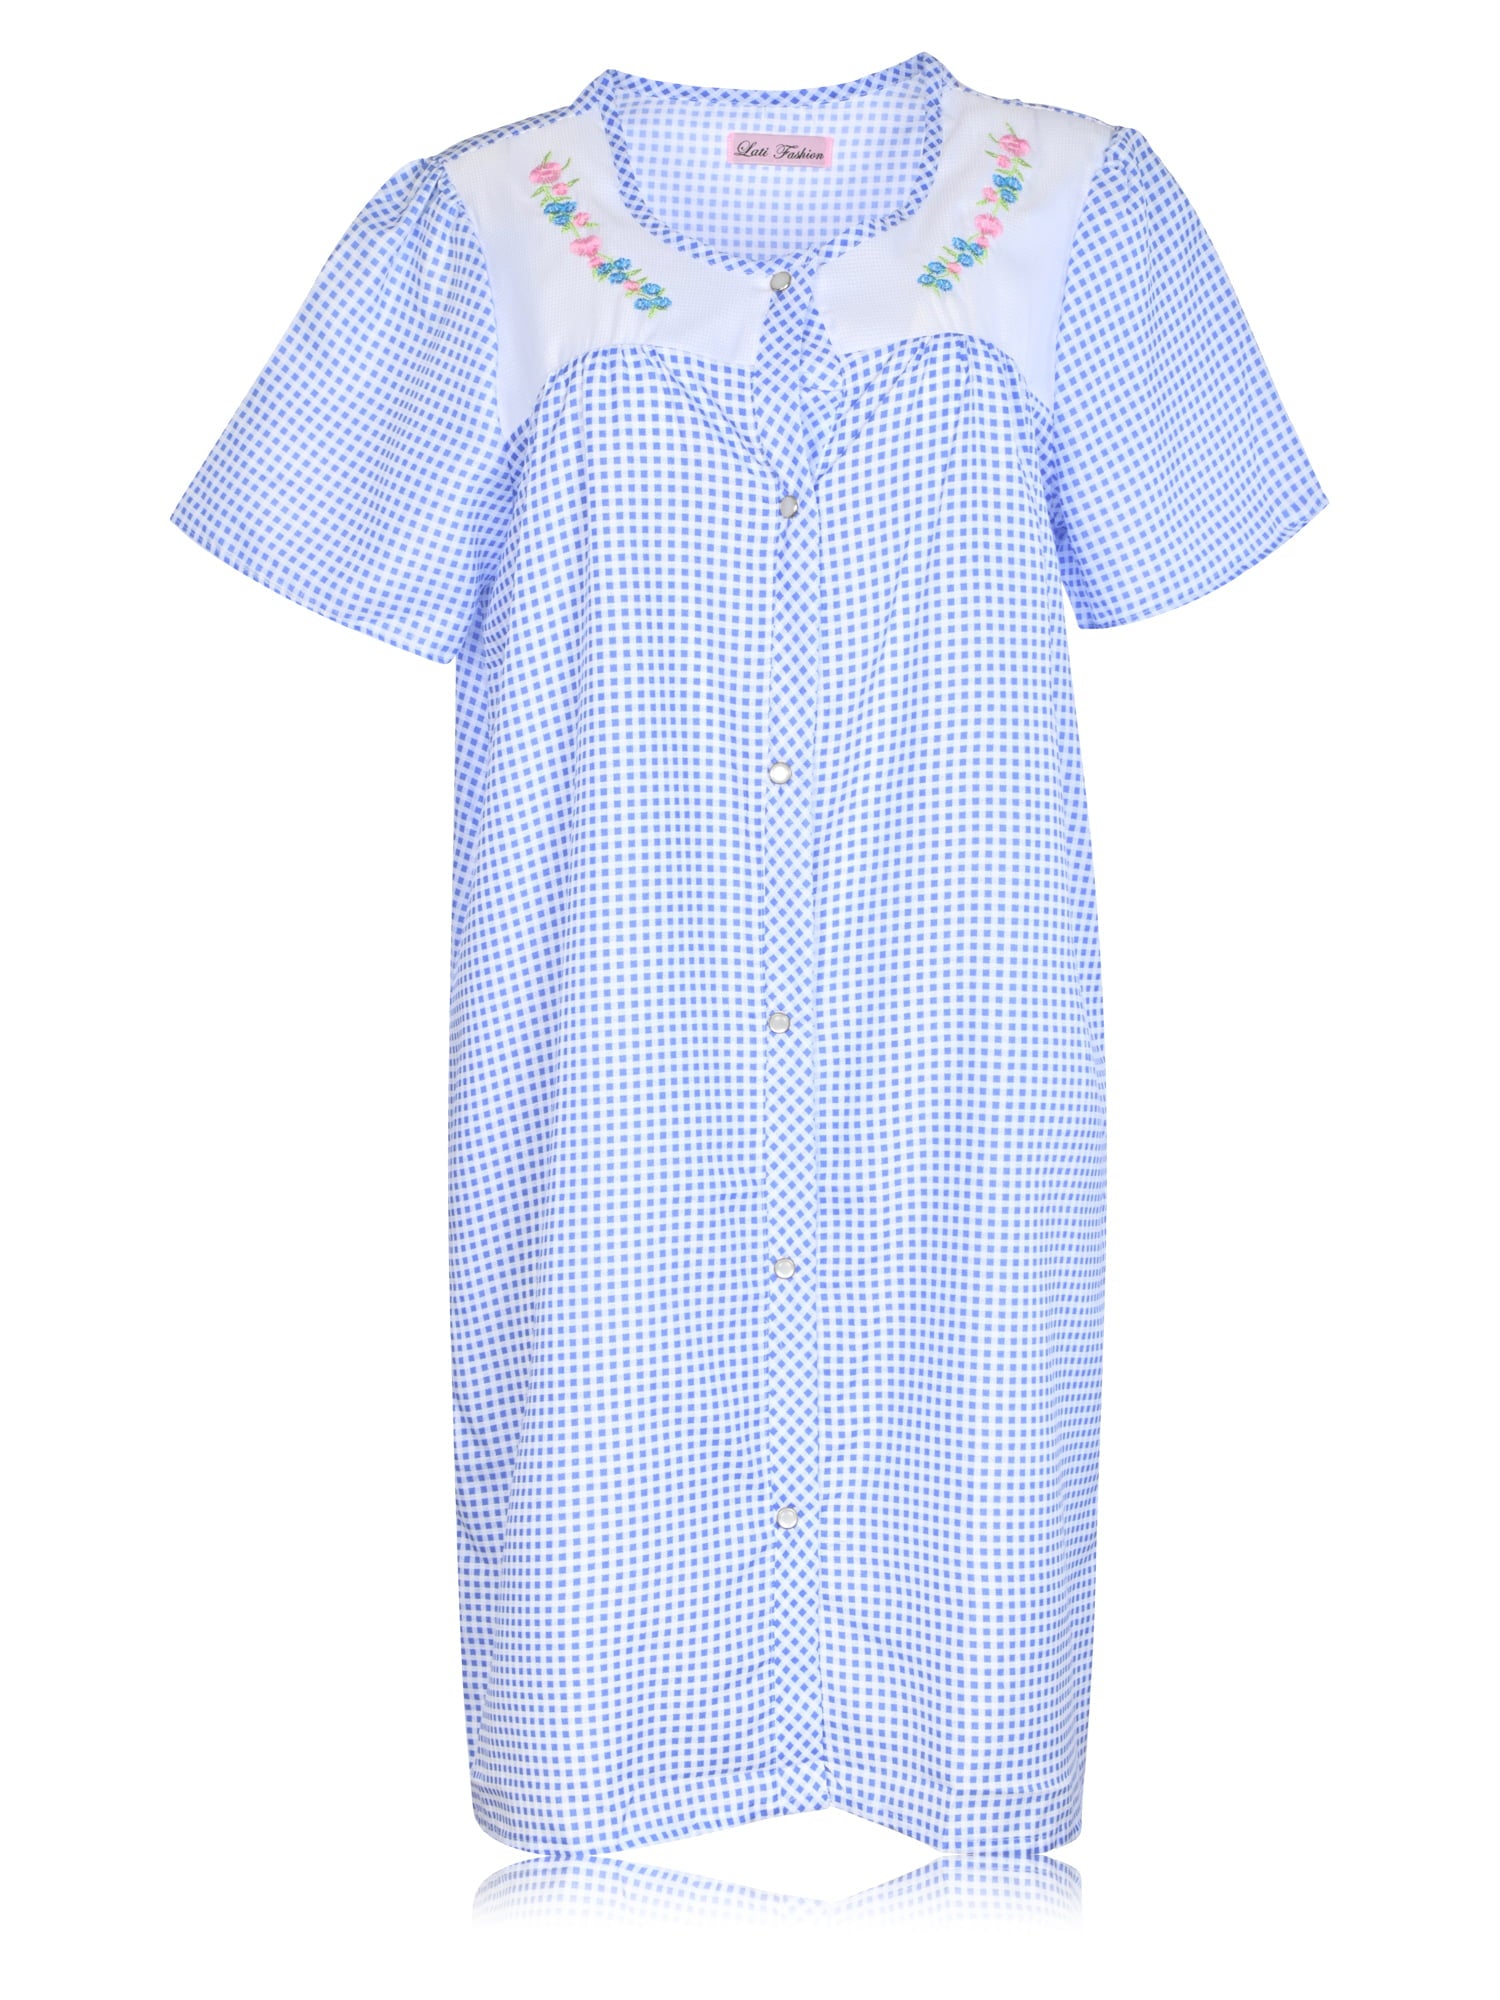 JEFFRICO Womens Sleeveless Nightgowns Sleepwear Soft Pajama Dress Nigh –  Regines